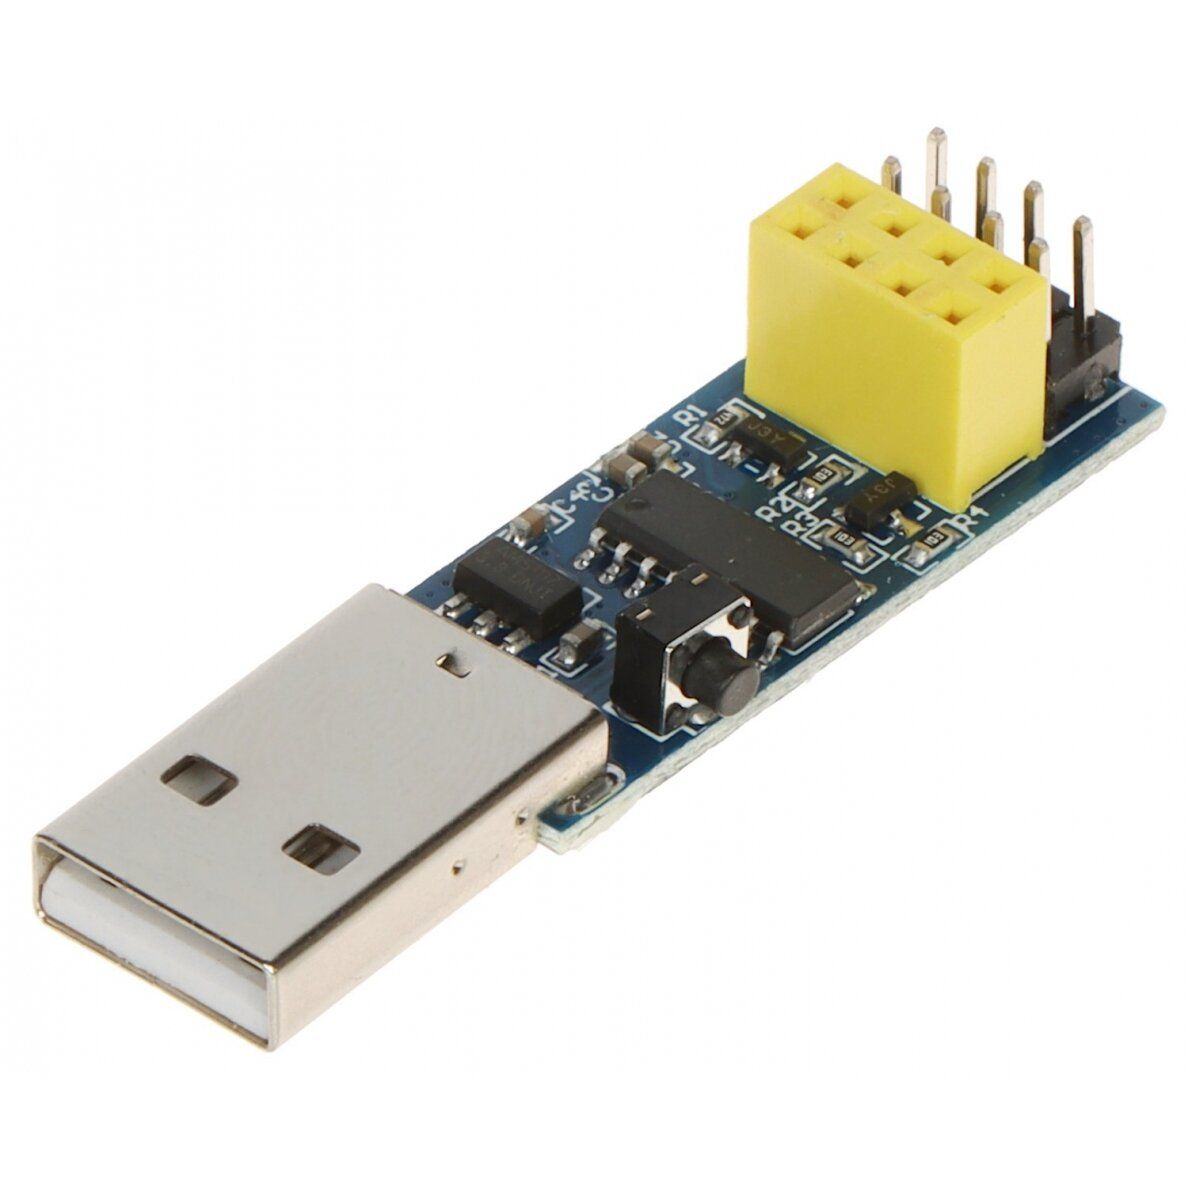 USBпрограмматорCH340GдляESP8266ESP-01cкнопкойперезагрузки